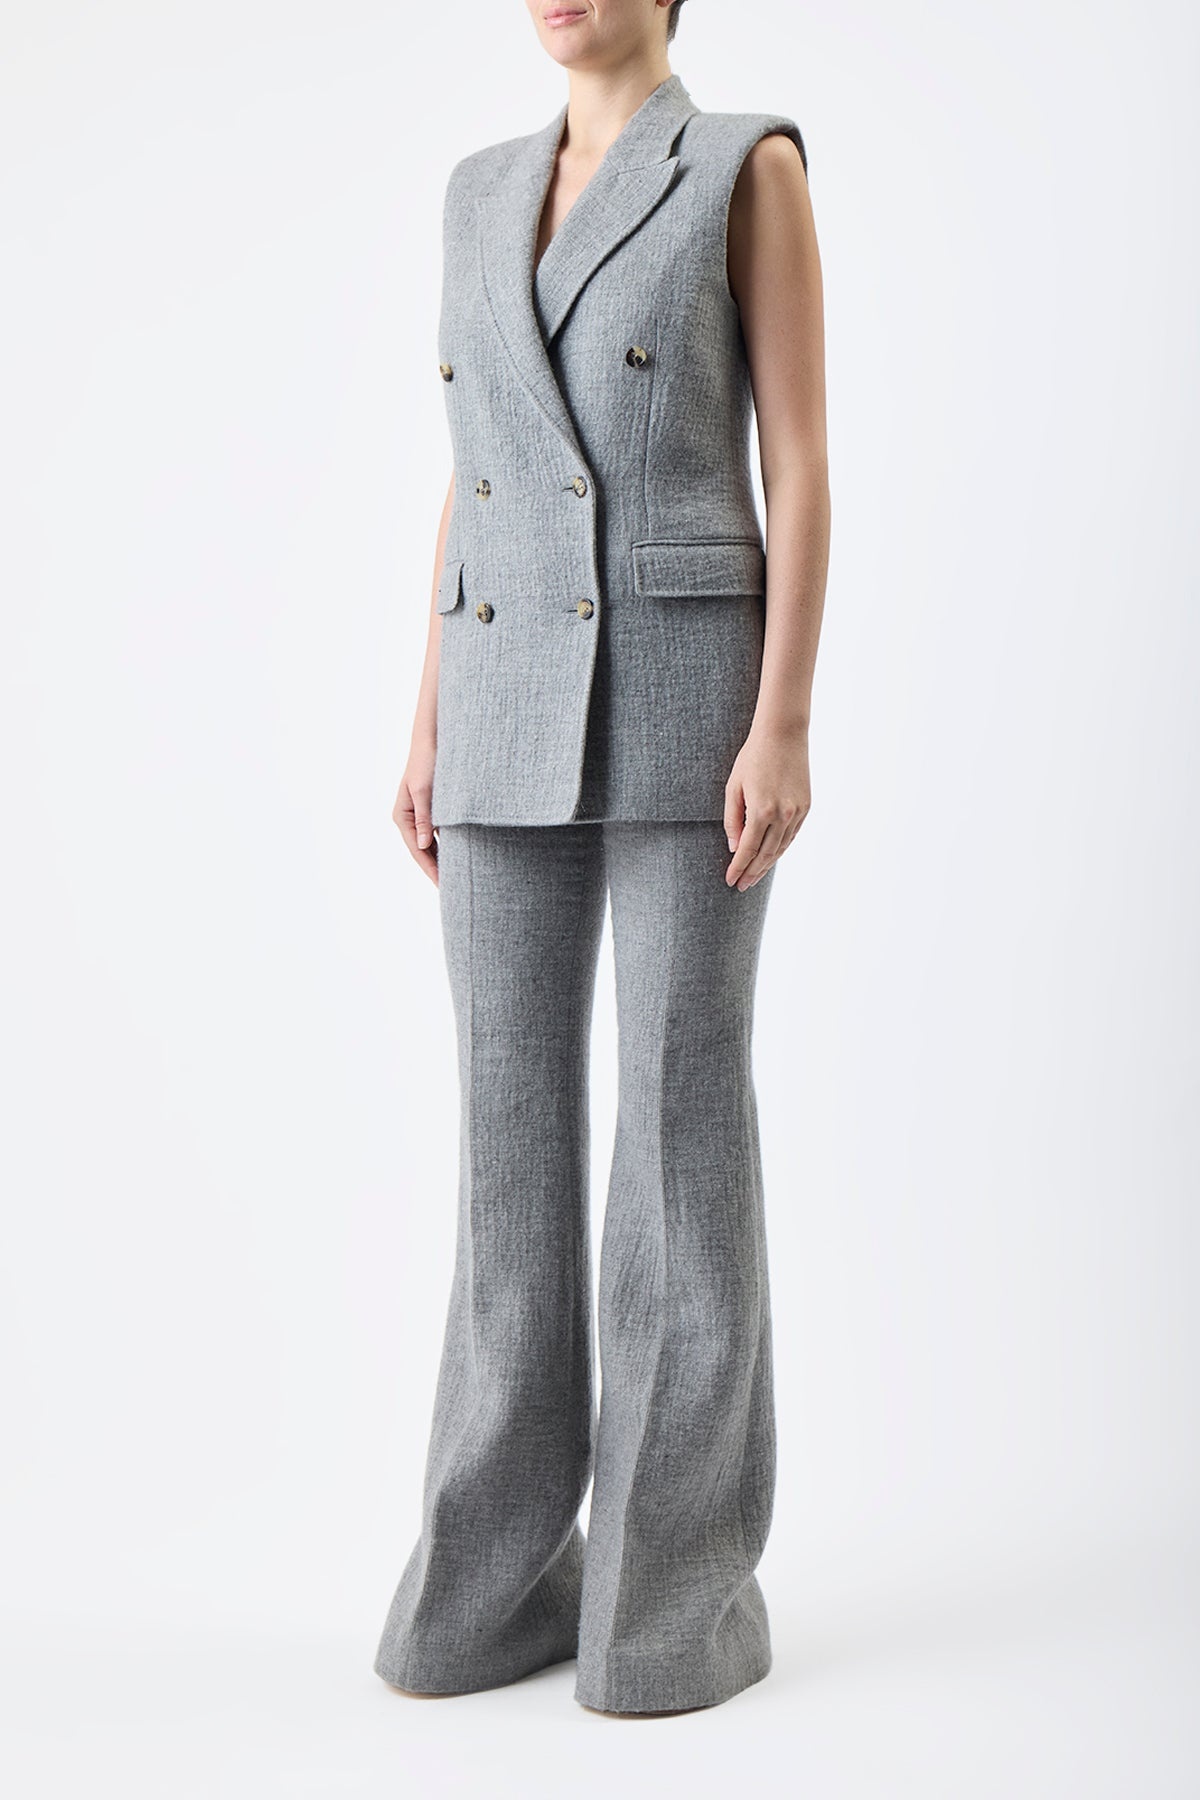 Mayte Vest in Light Grey Cashmere Linen - 4